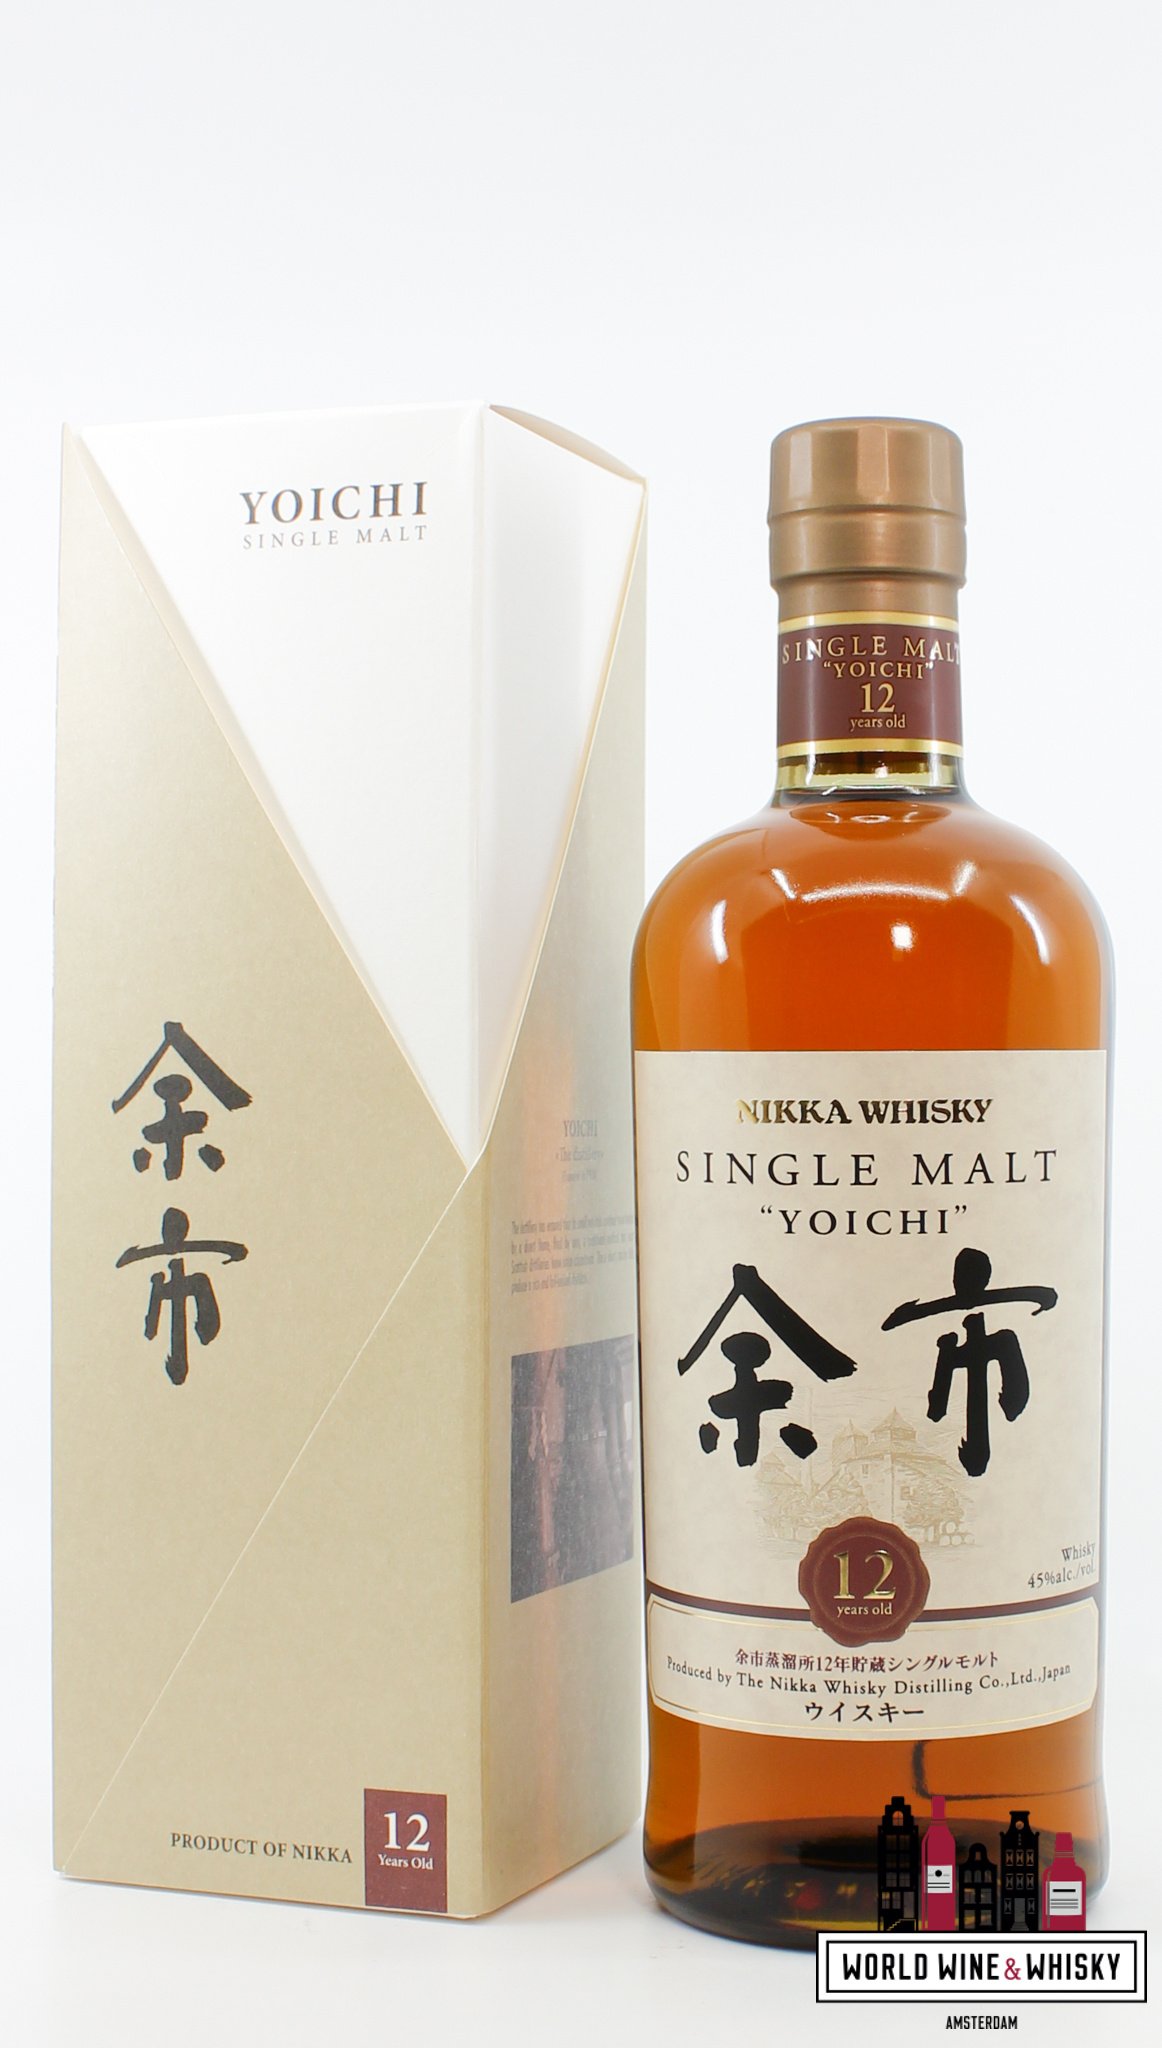 Yoichi Yoichi 12 Years Old - Single Malt - Nikka Whisky 45%